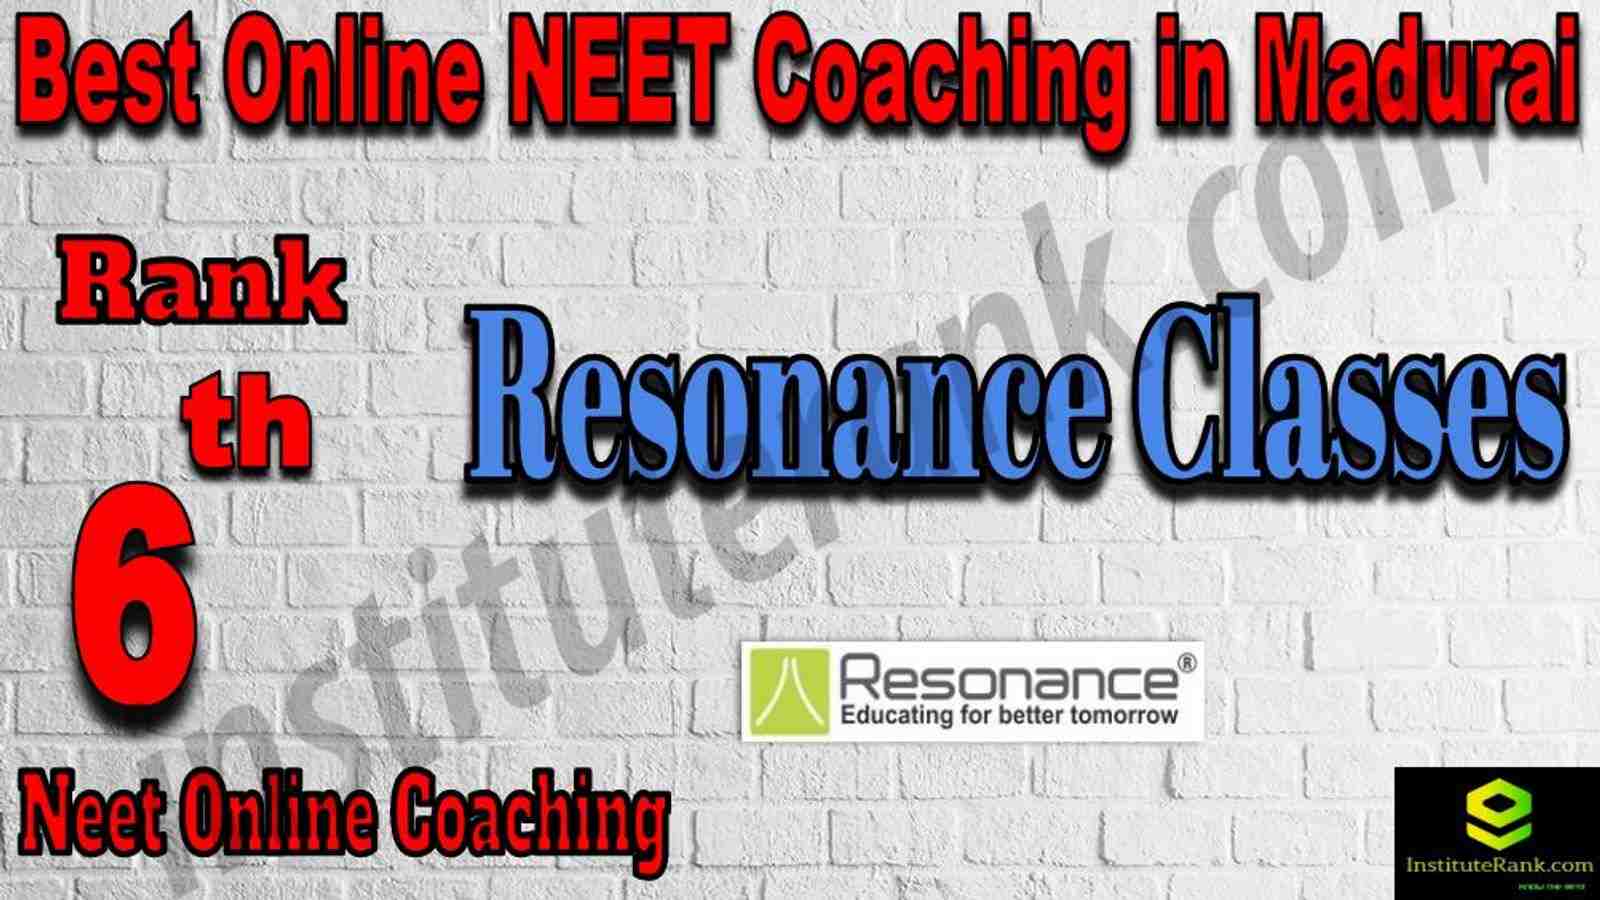 6th Best Online Neet Coaching in Madurai